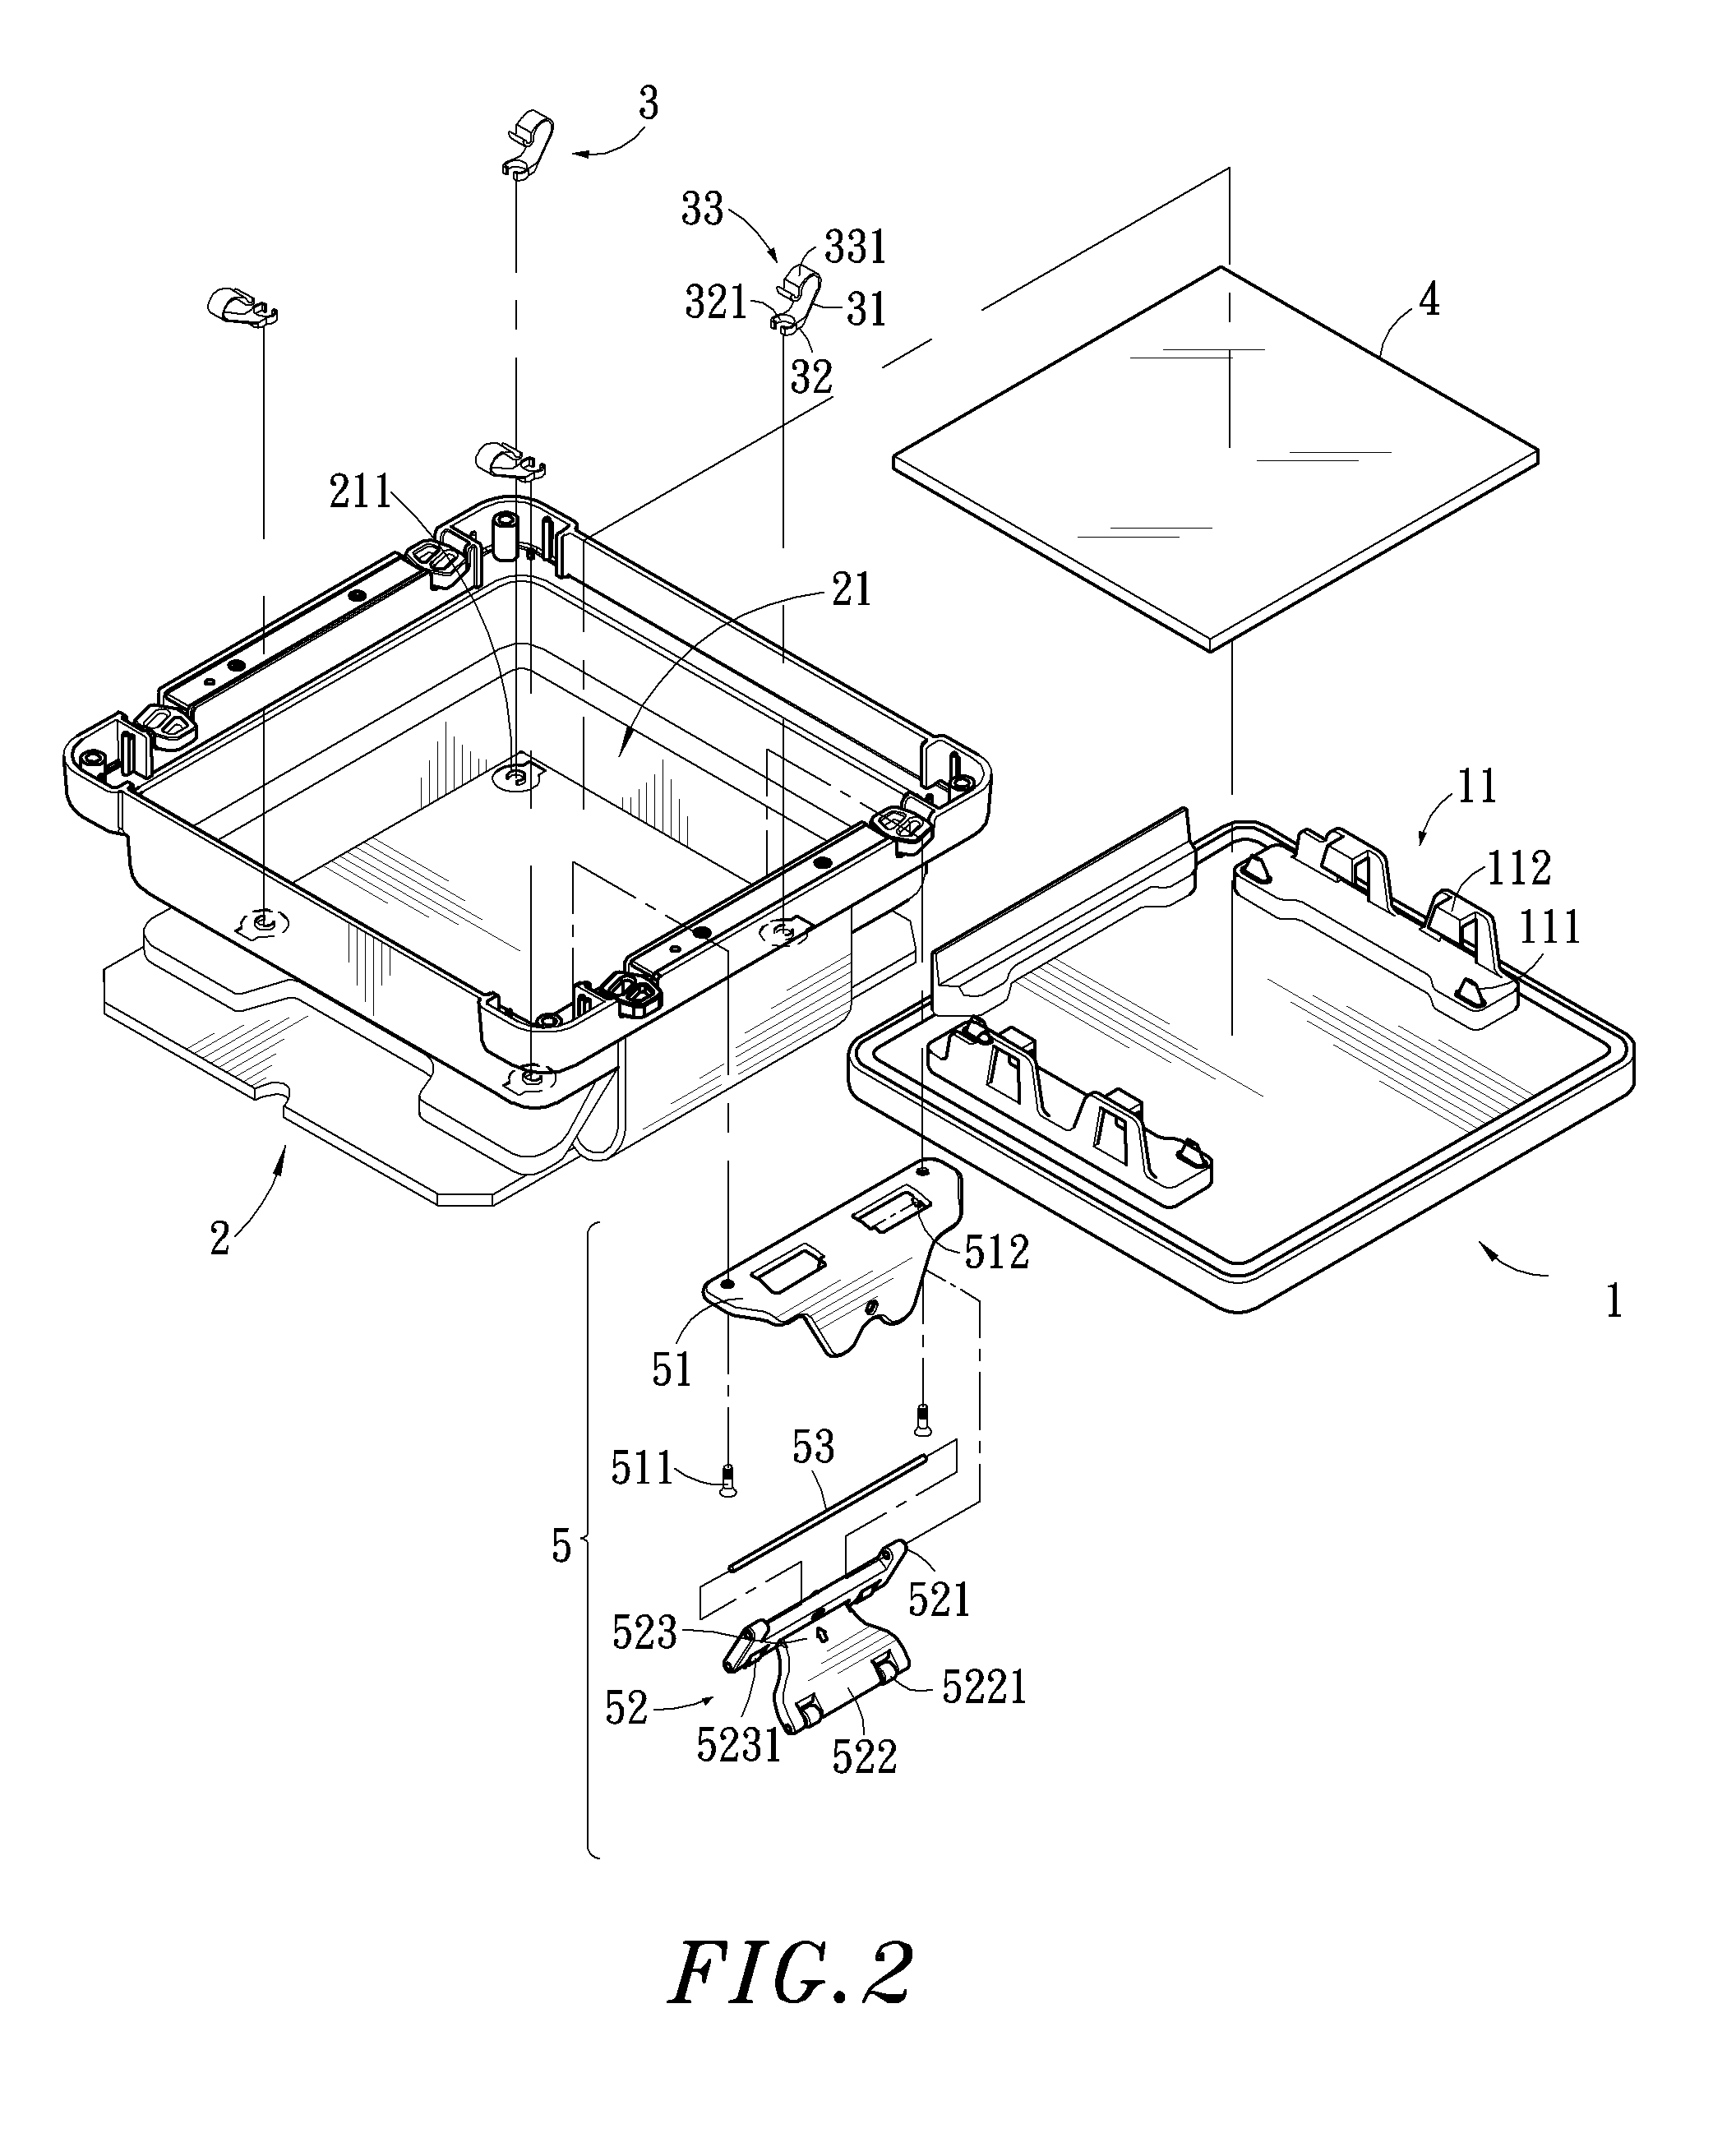 Photomask positioning apparatus